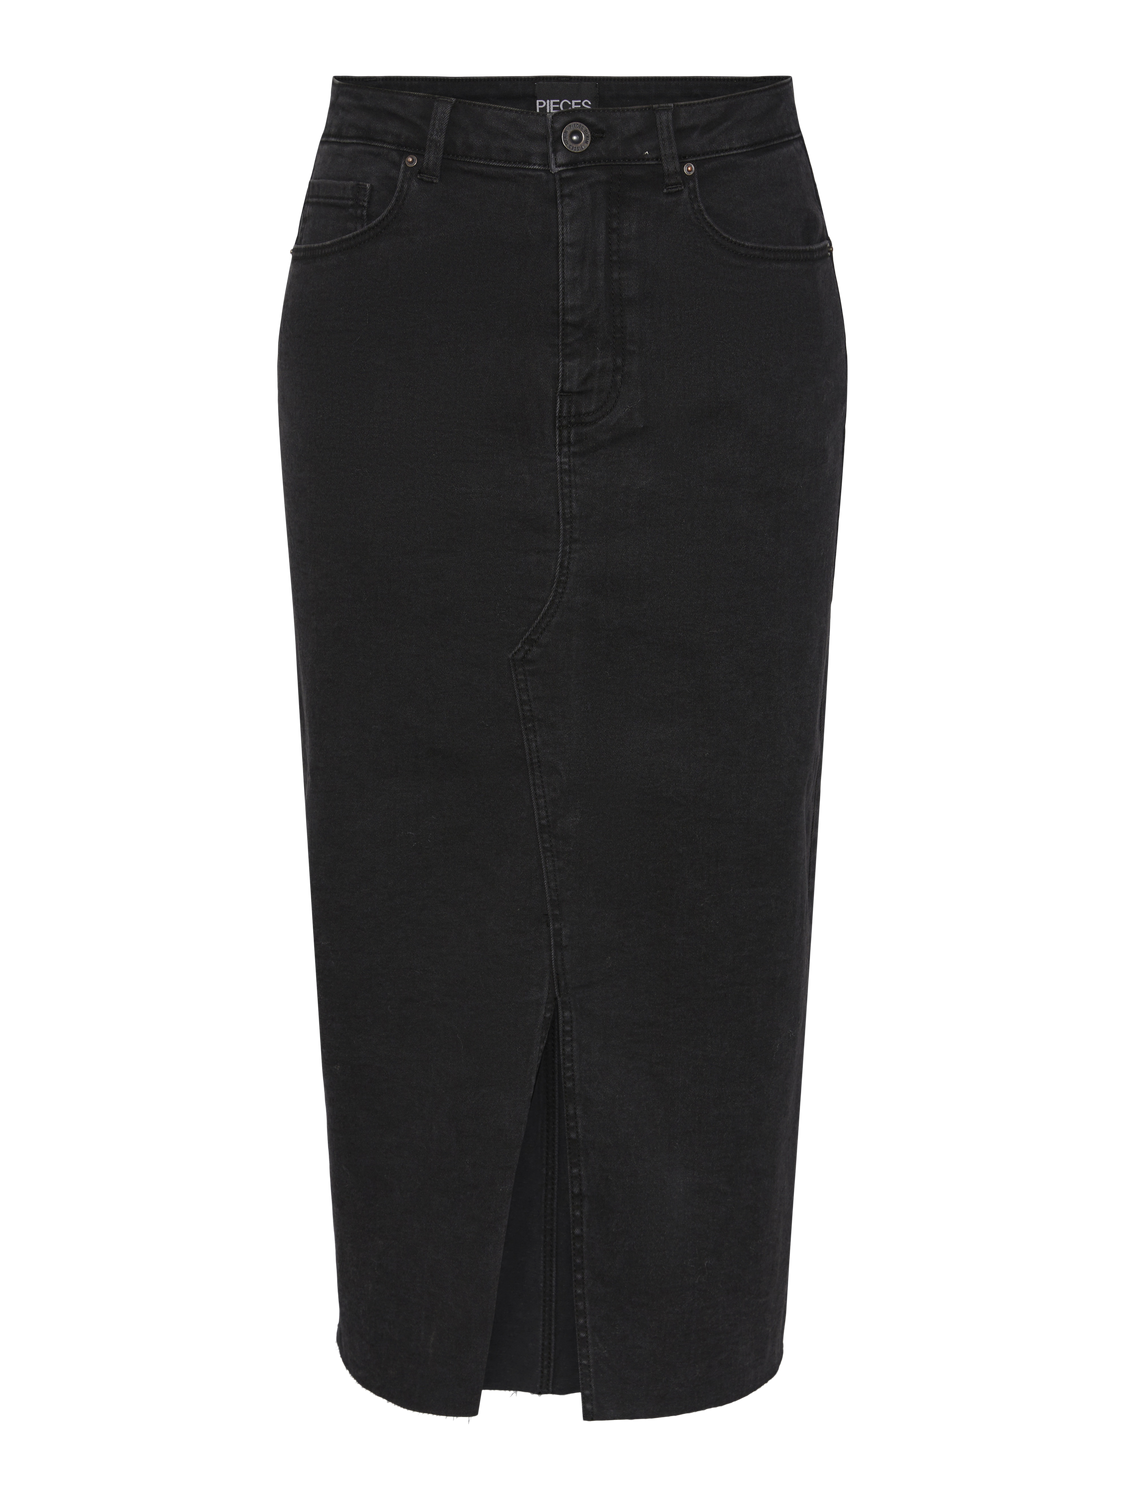 PCJESSICA Skirt - Black